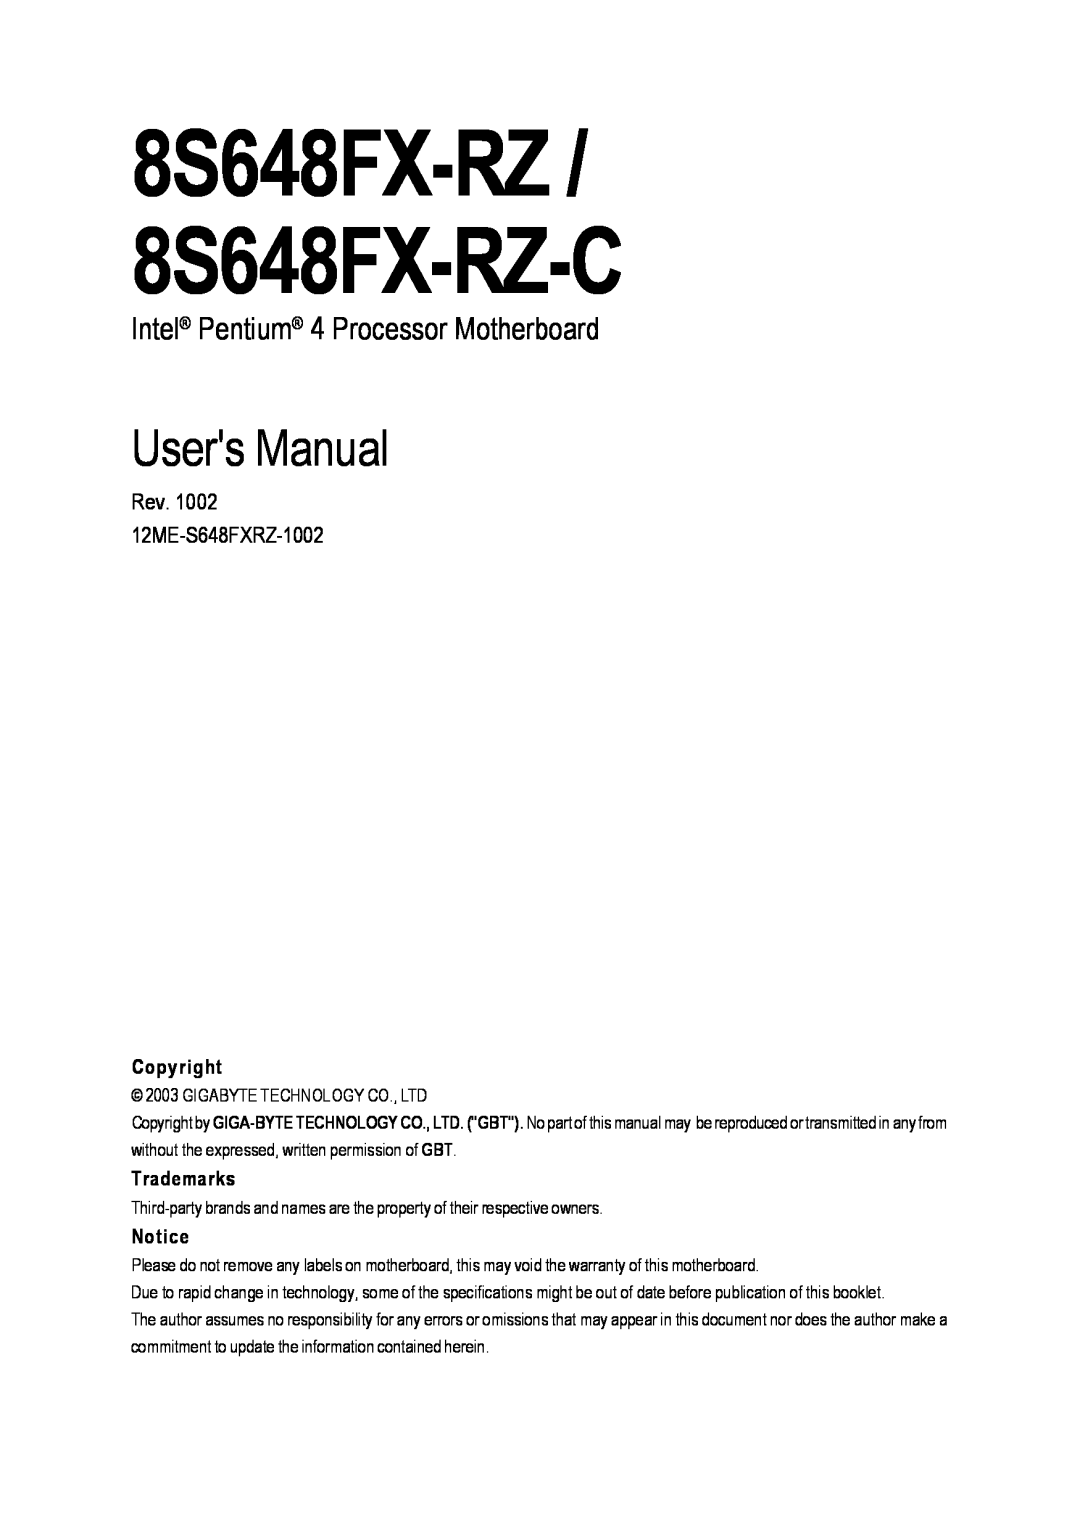 Gigabyte user manual 8S648FX-RZ / 8S648FX-RZ-C, Users Manual, Intel Pentium 4 Processor Motherboard, Copyright 